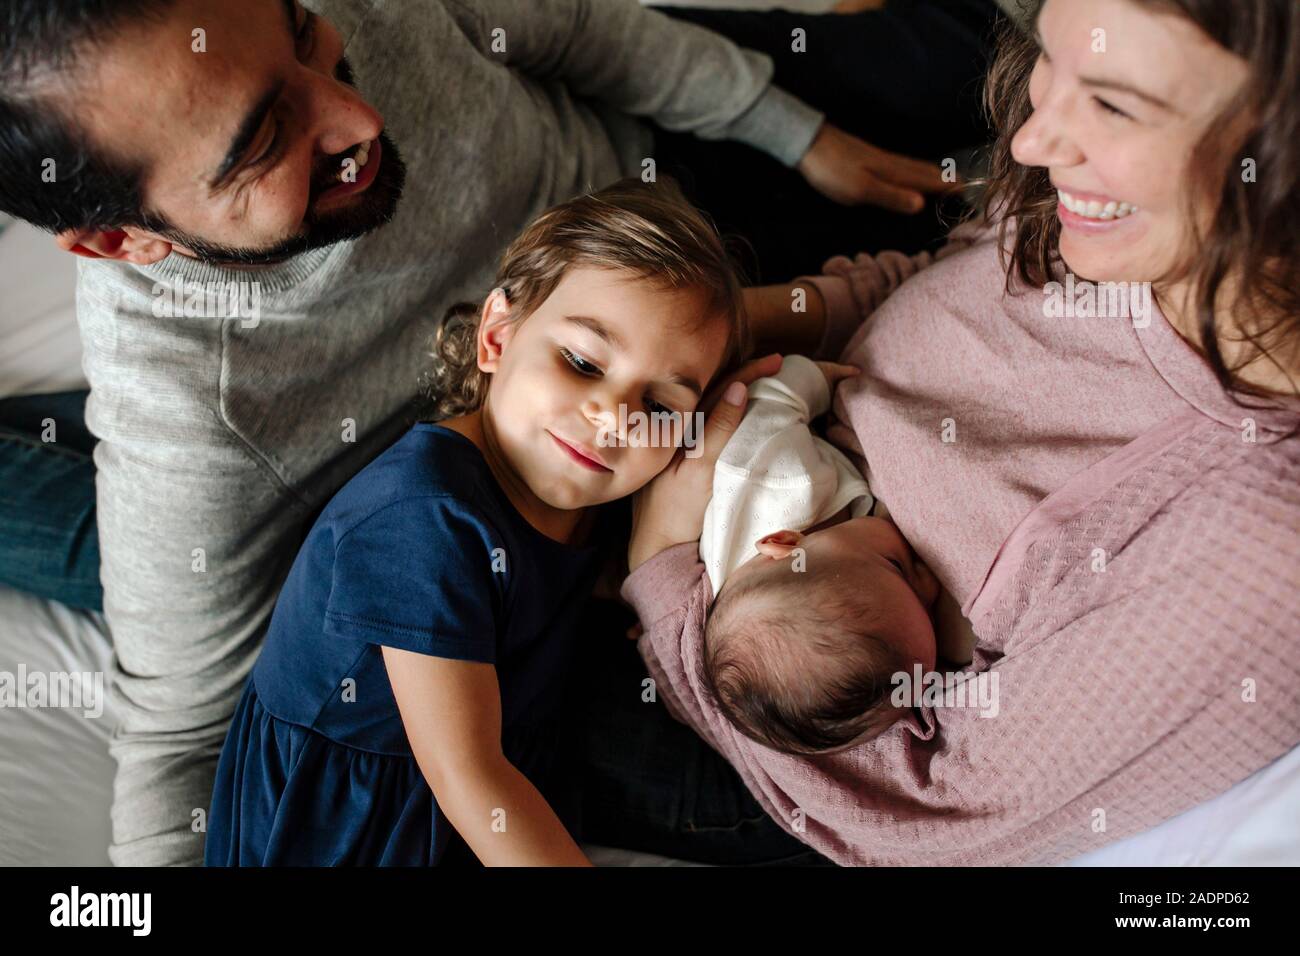 Smiling dad, mom and 4 yr old cuddle nursing newborn baby Stock Photo